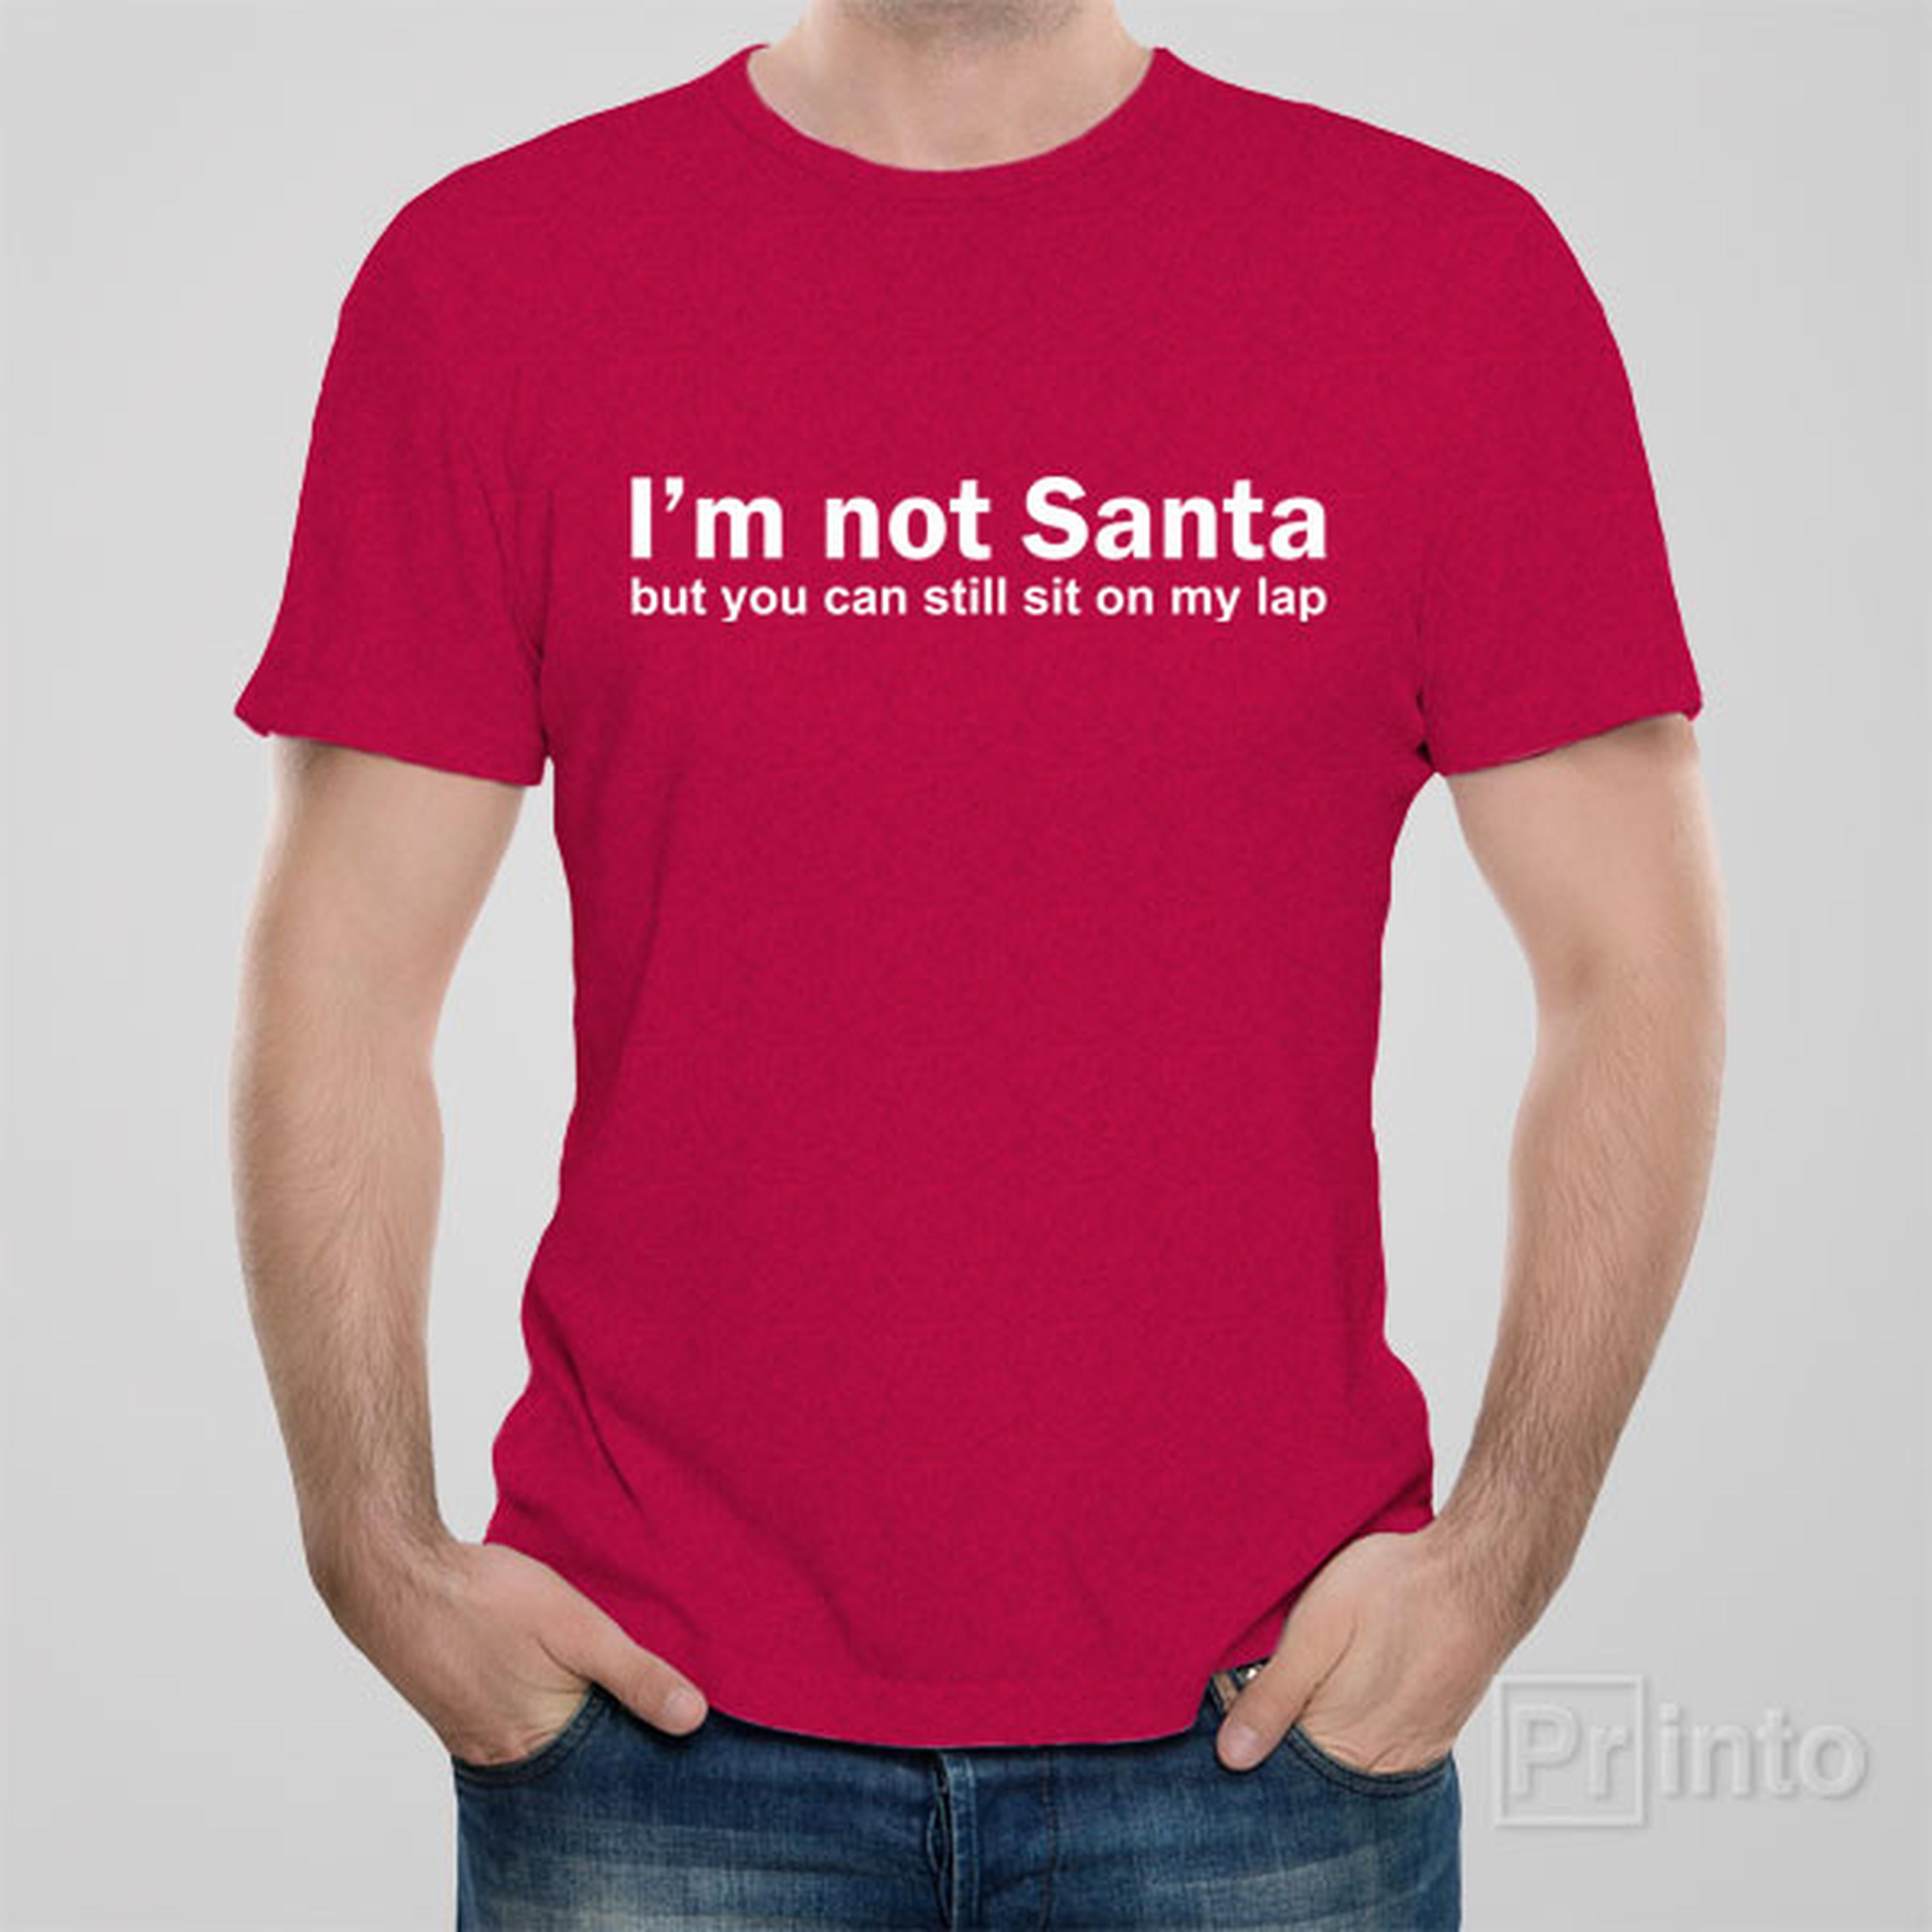 i-am-not-santa-t-shirt